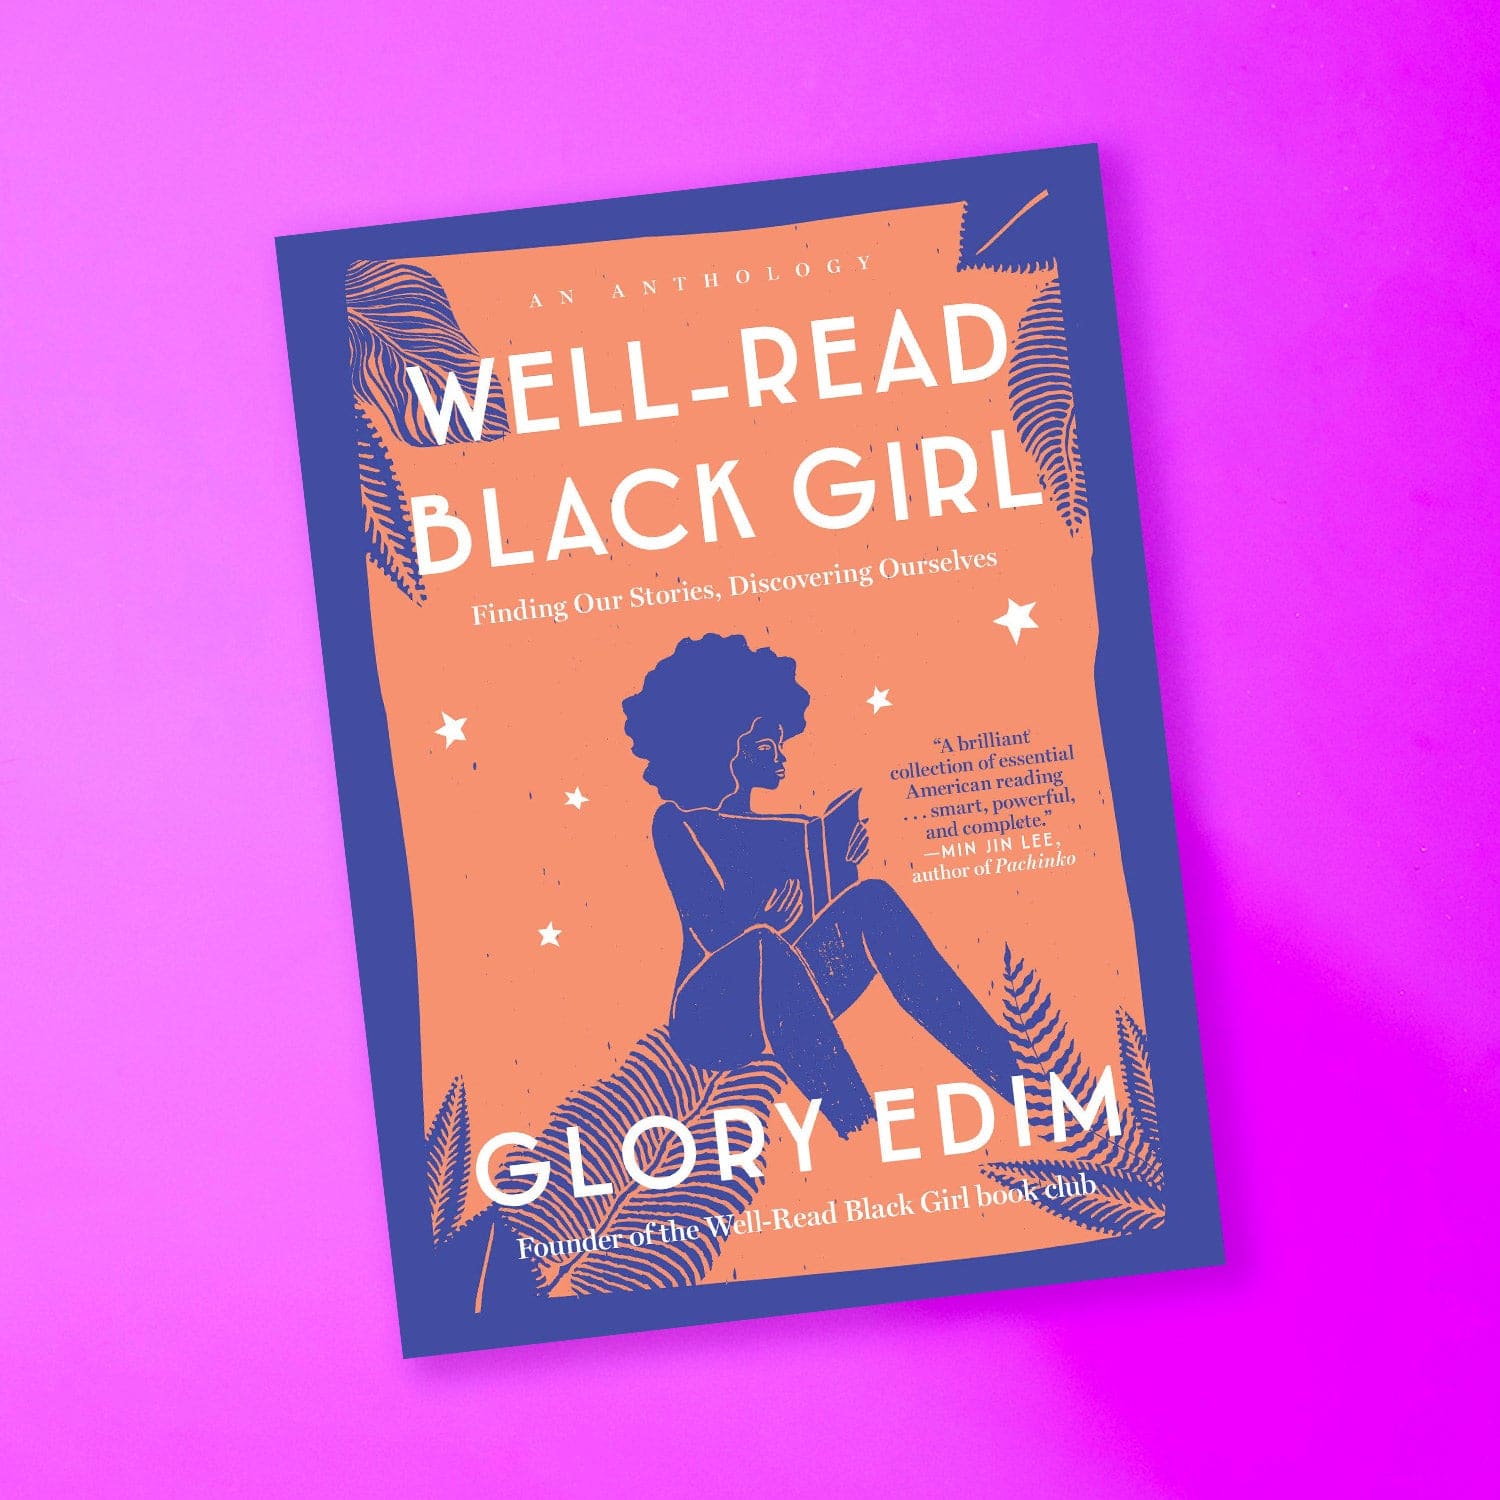 Well-Read Black Girl' Is Bigger Than Glory Edim - The New York Times